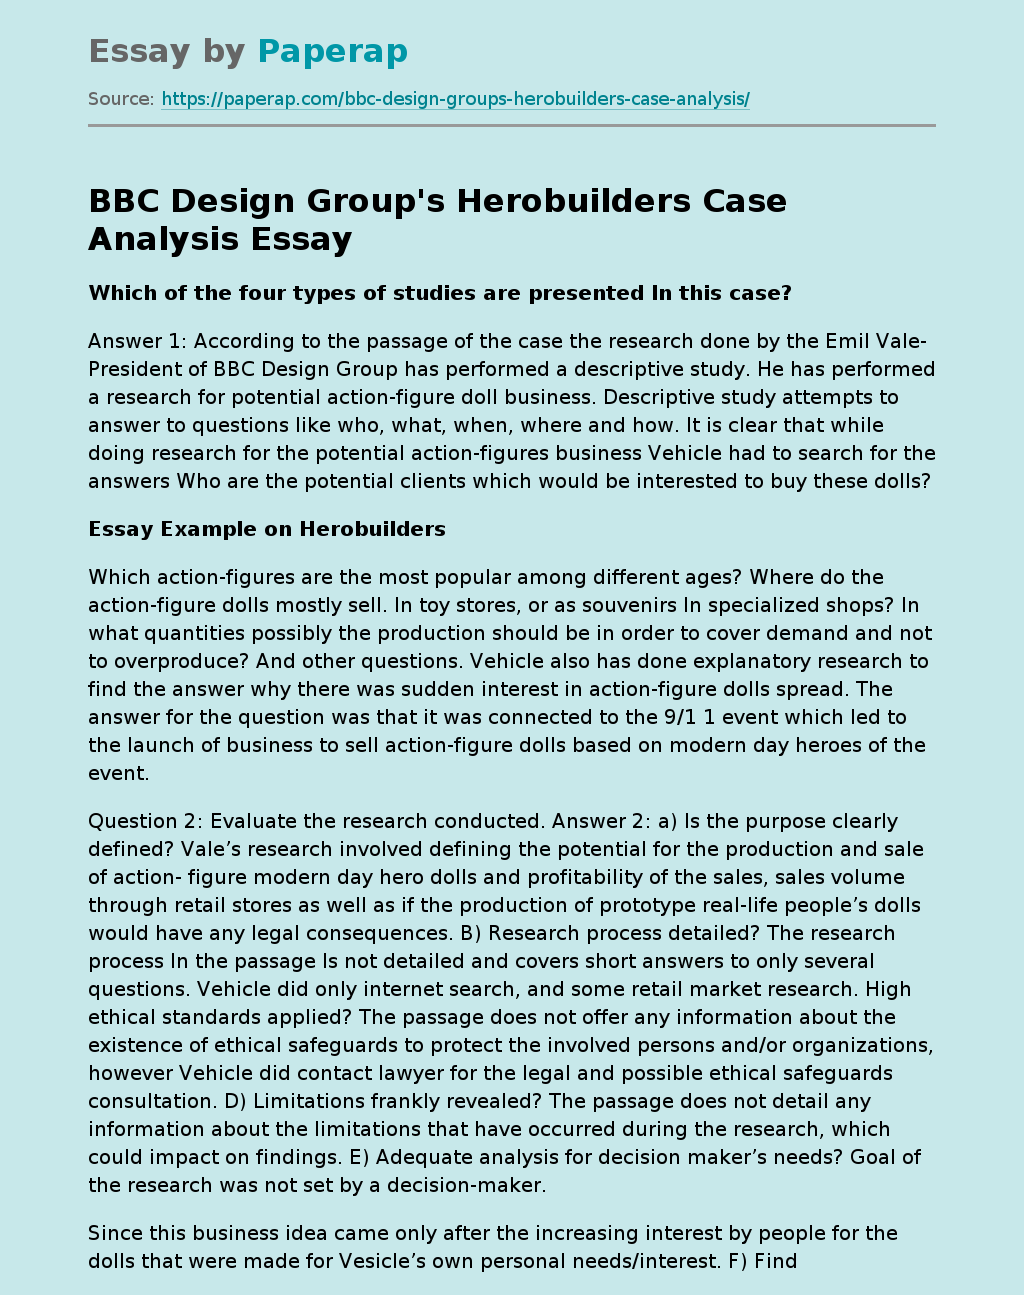 BBC Design Group's Herobuilders Case Analysis